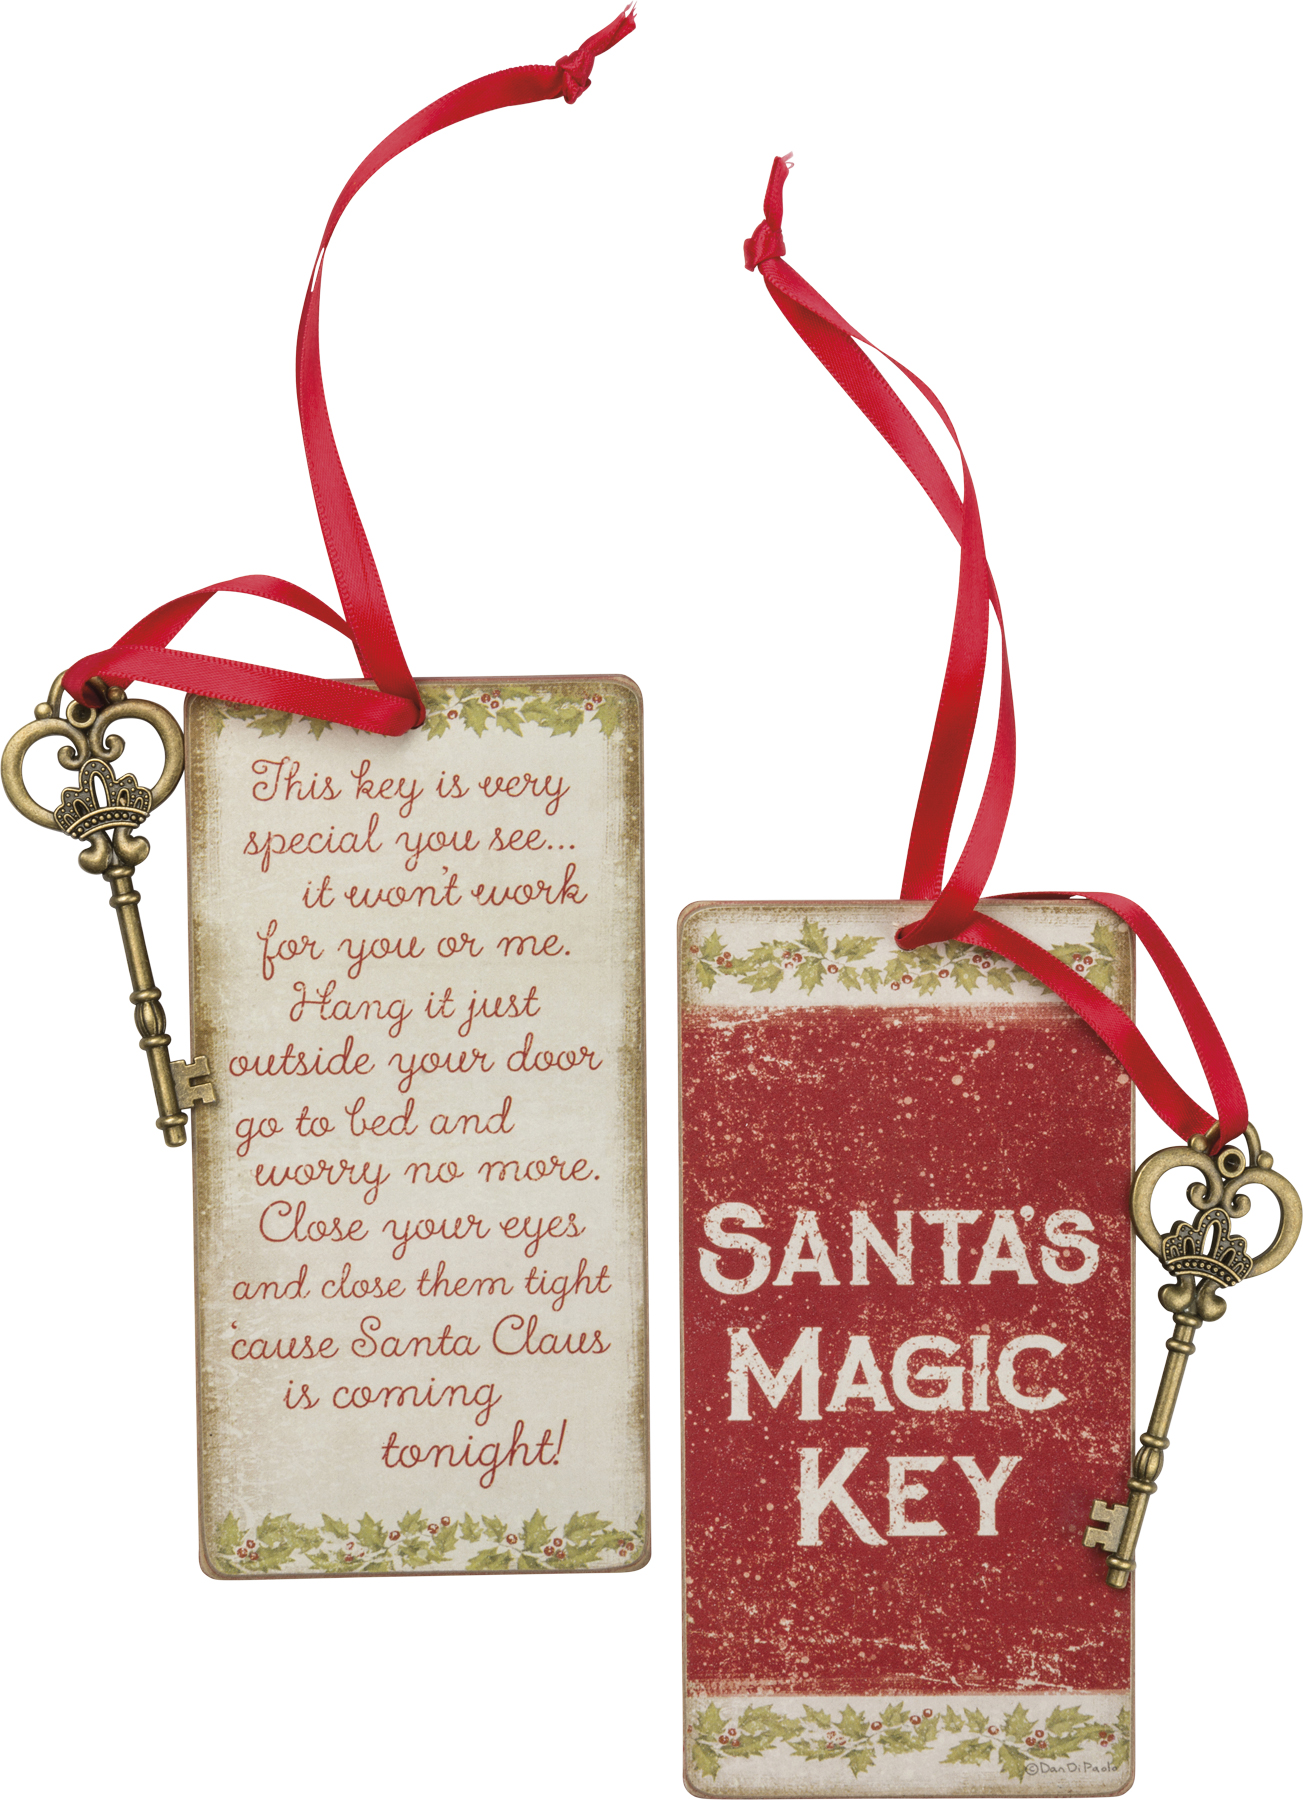 Vintage Santa's Magic Key Ornament